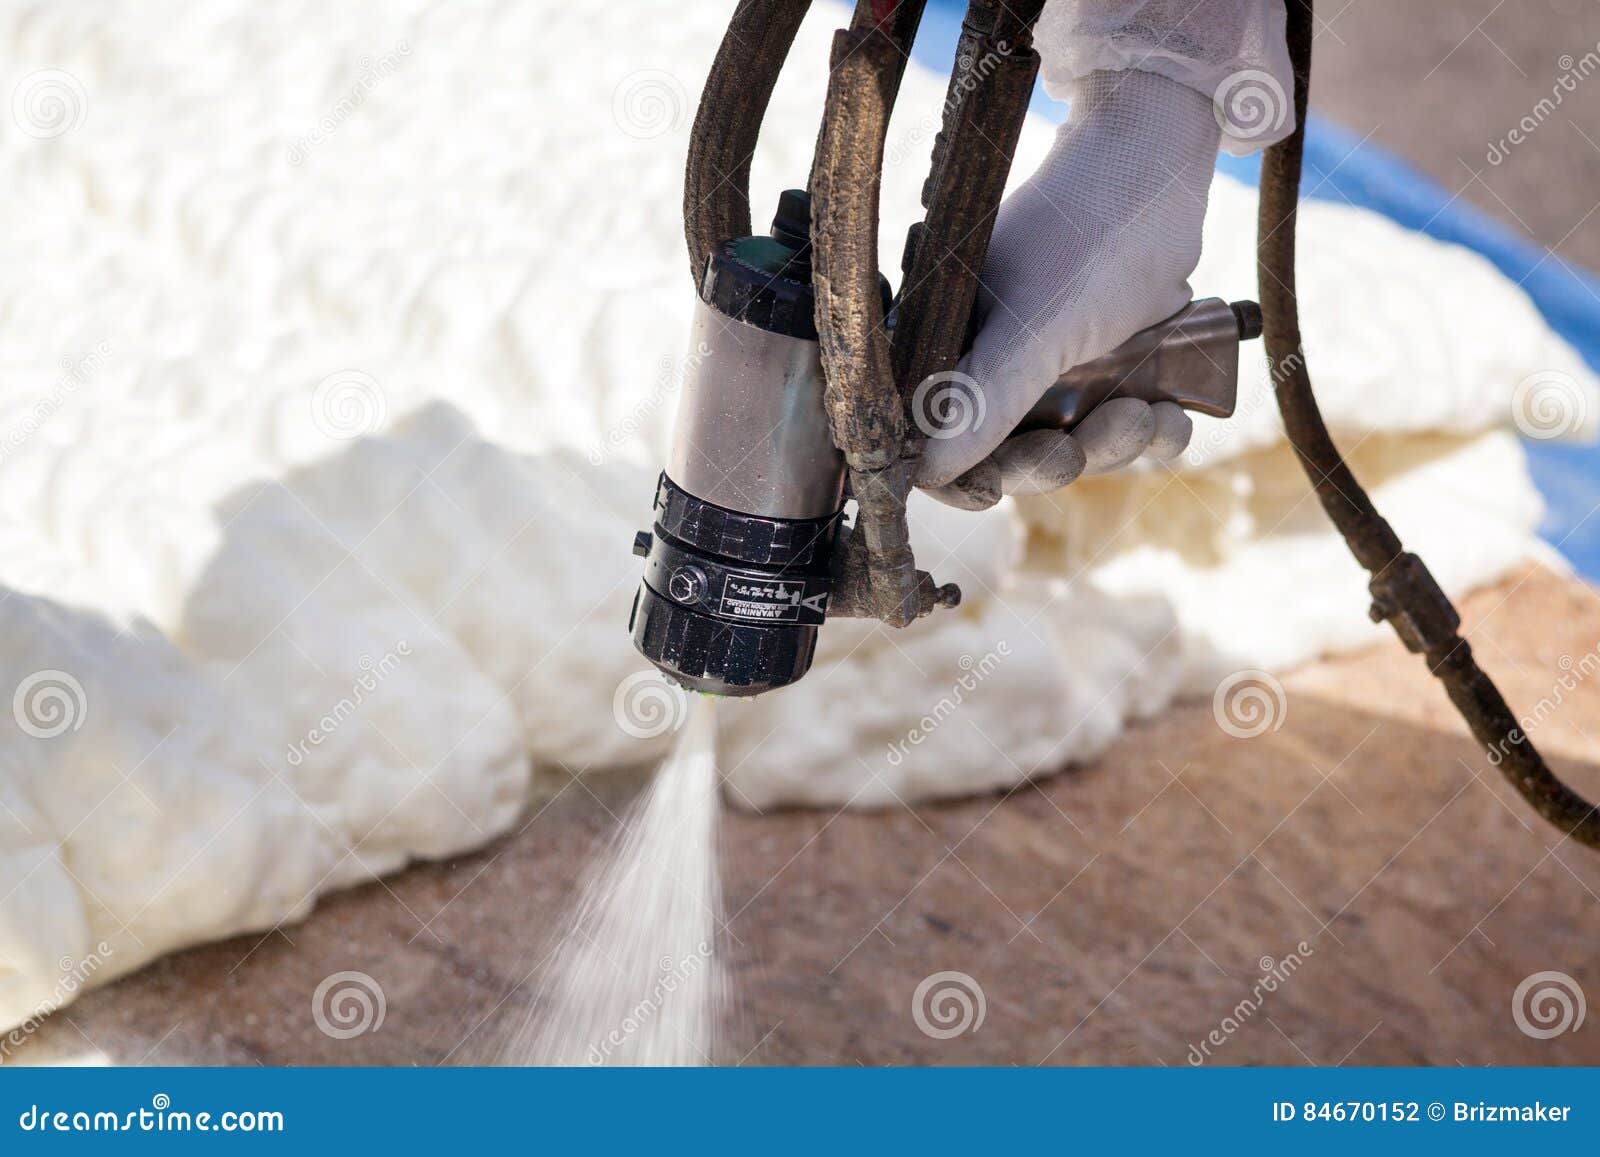 technician spraying foam insulation using plural component spray gun.